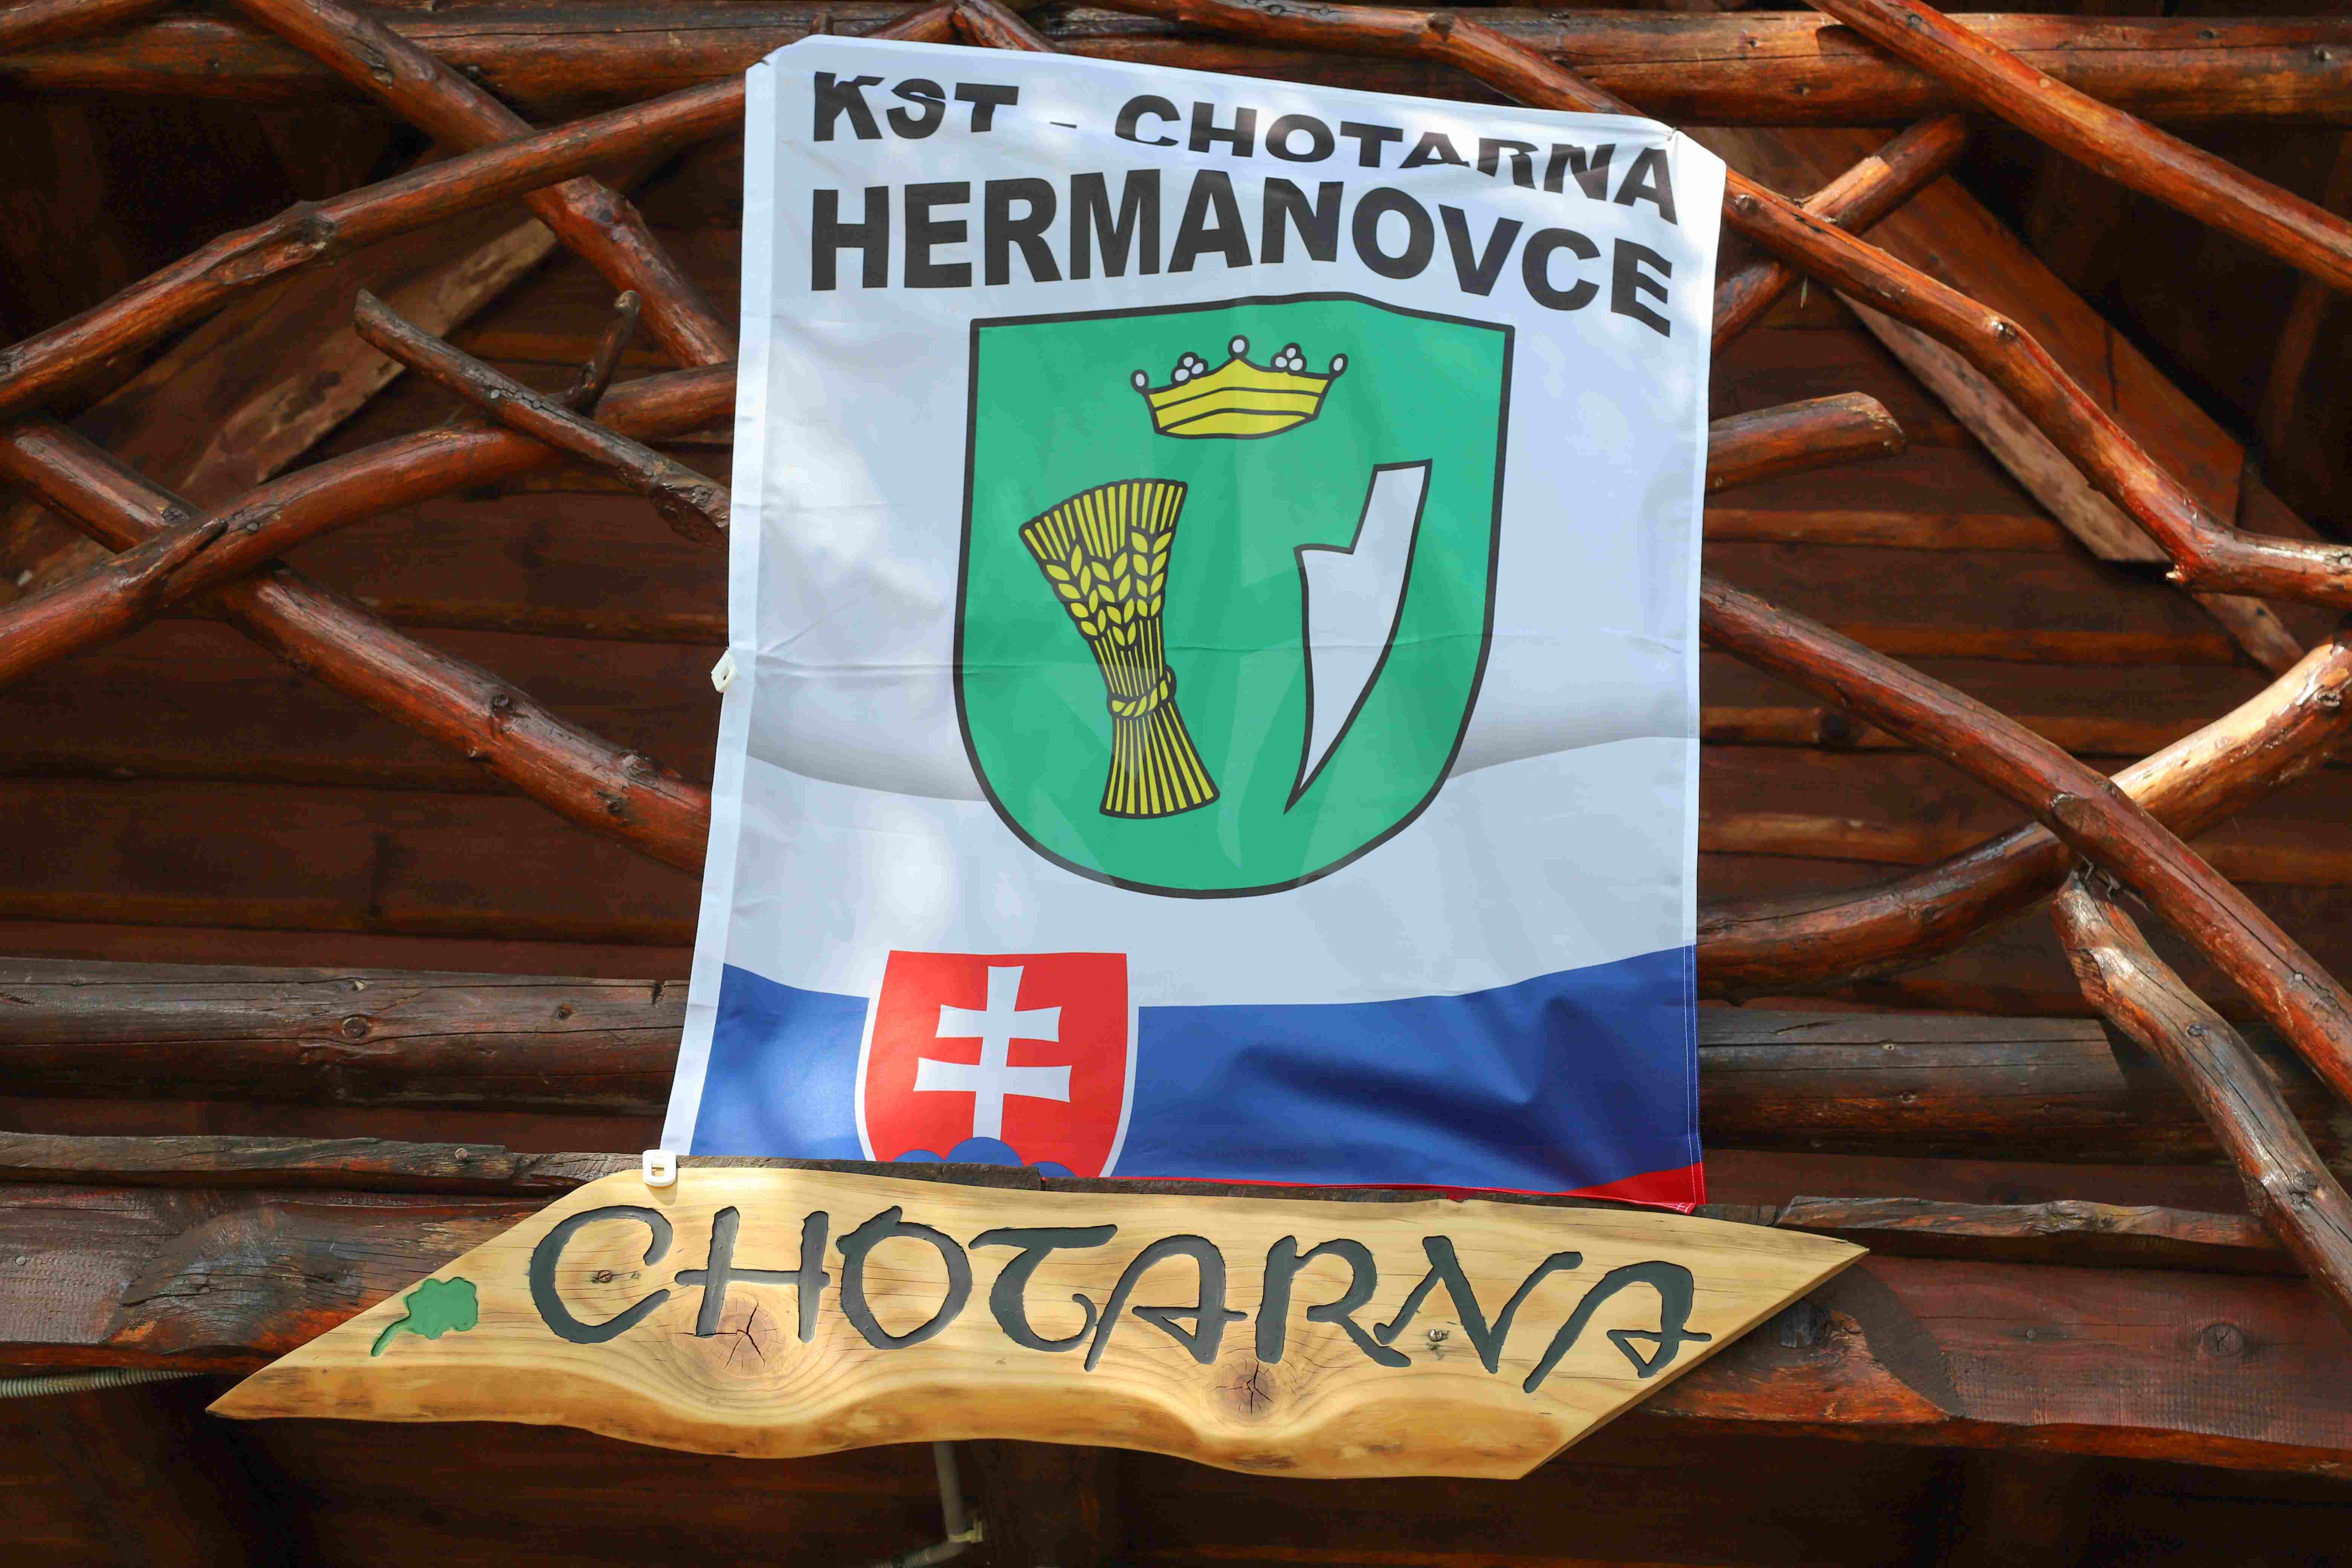 KST Chotarna Hermanovce